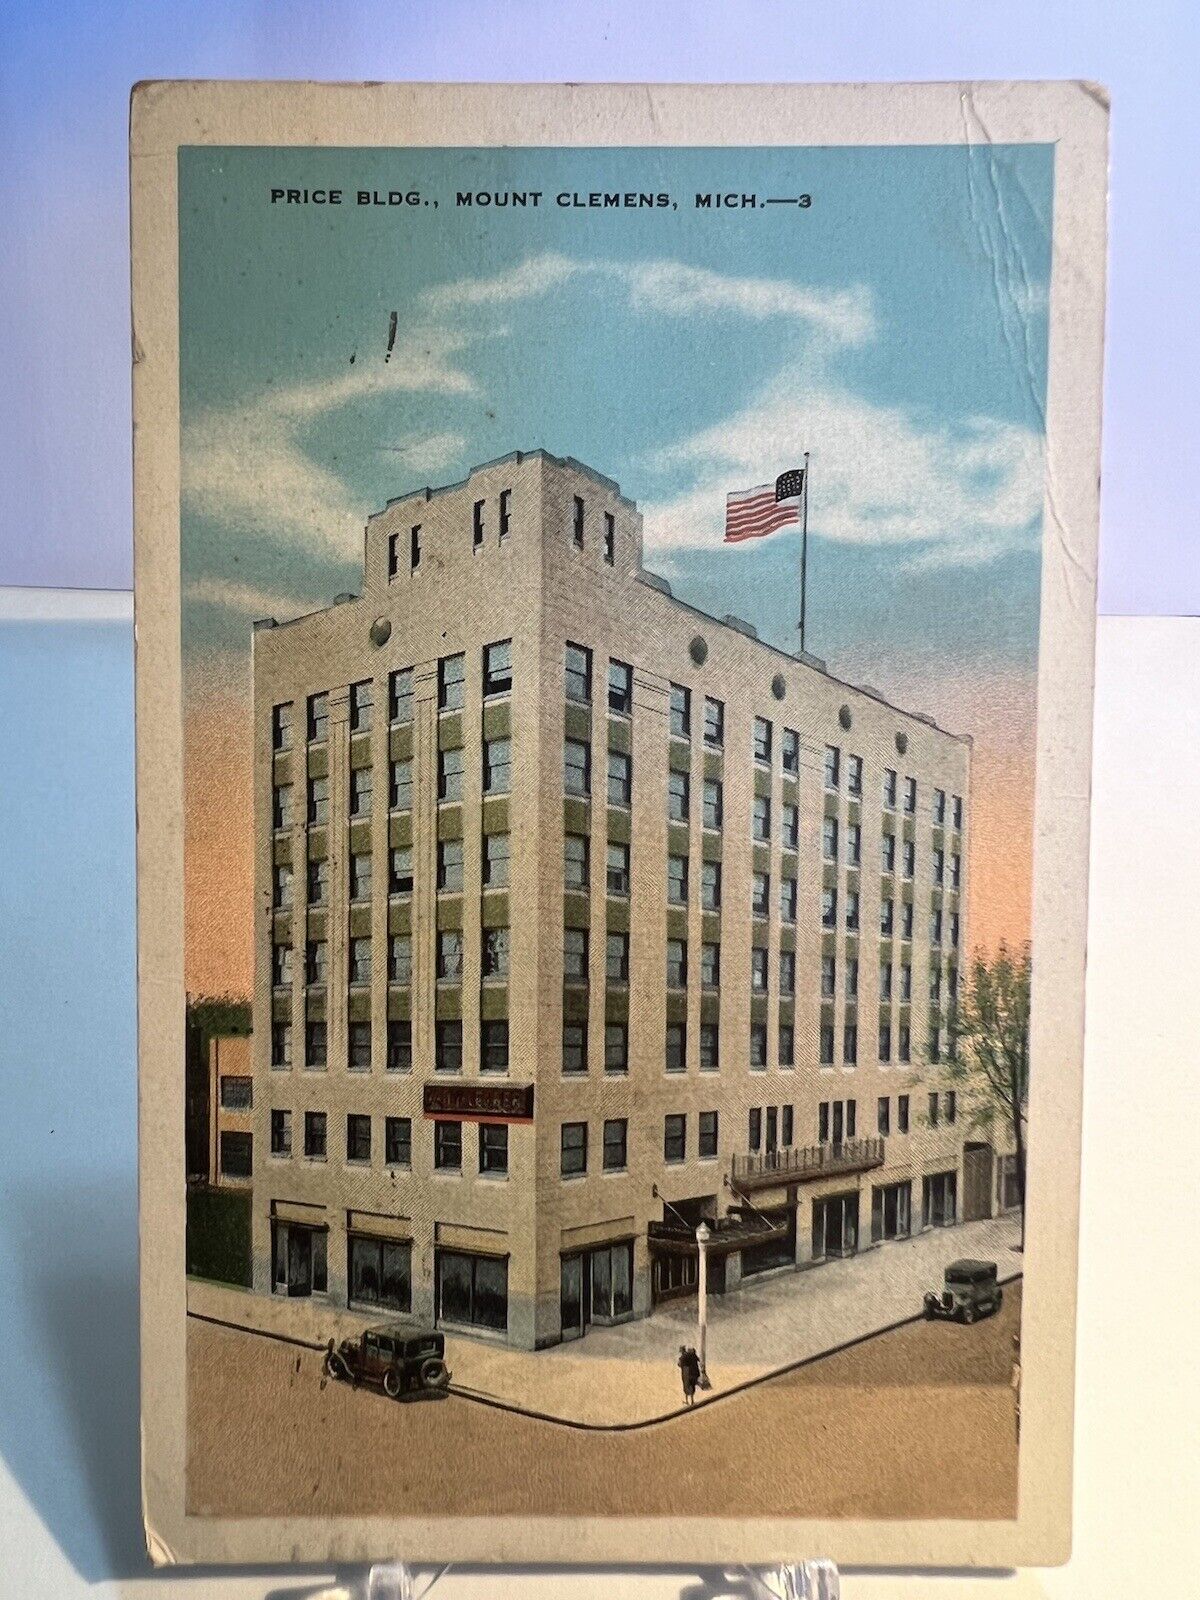 c1930 Price Building Exterior - Classic Cars - Road Mount Clemens, MI Postcard